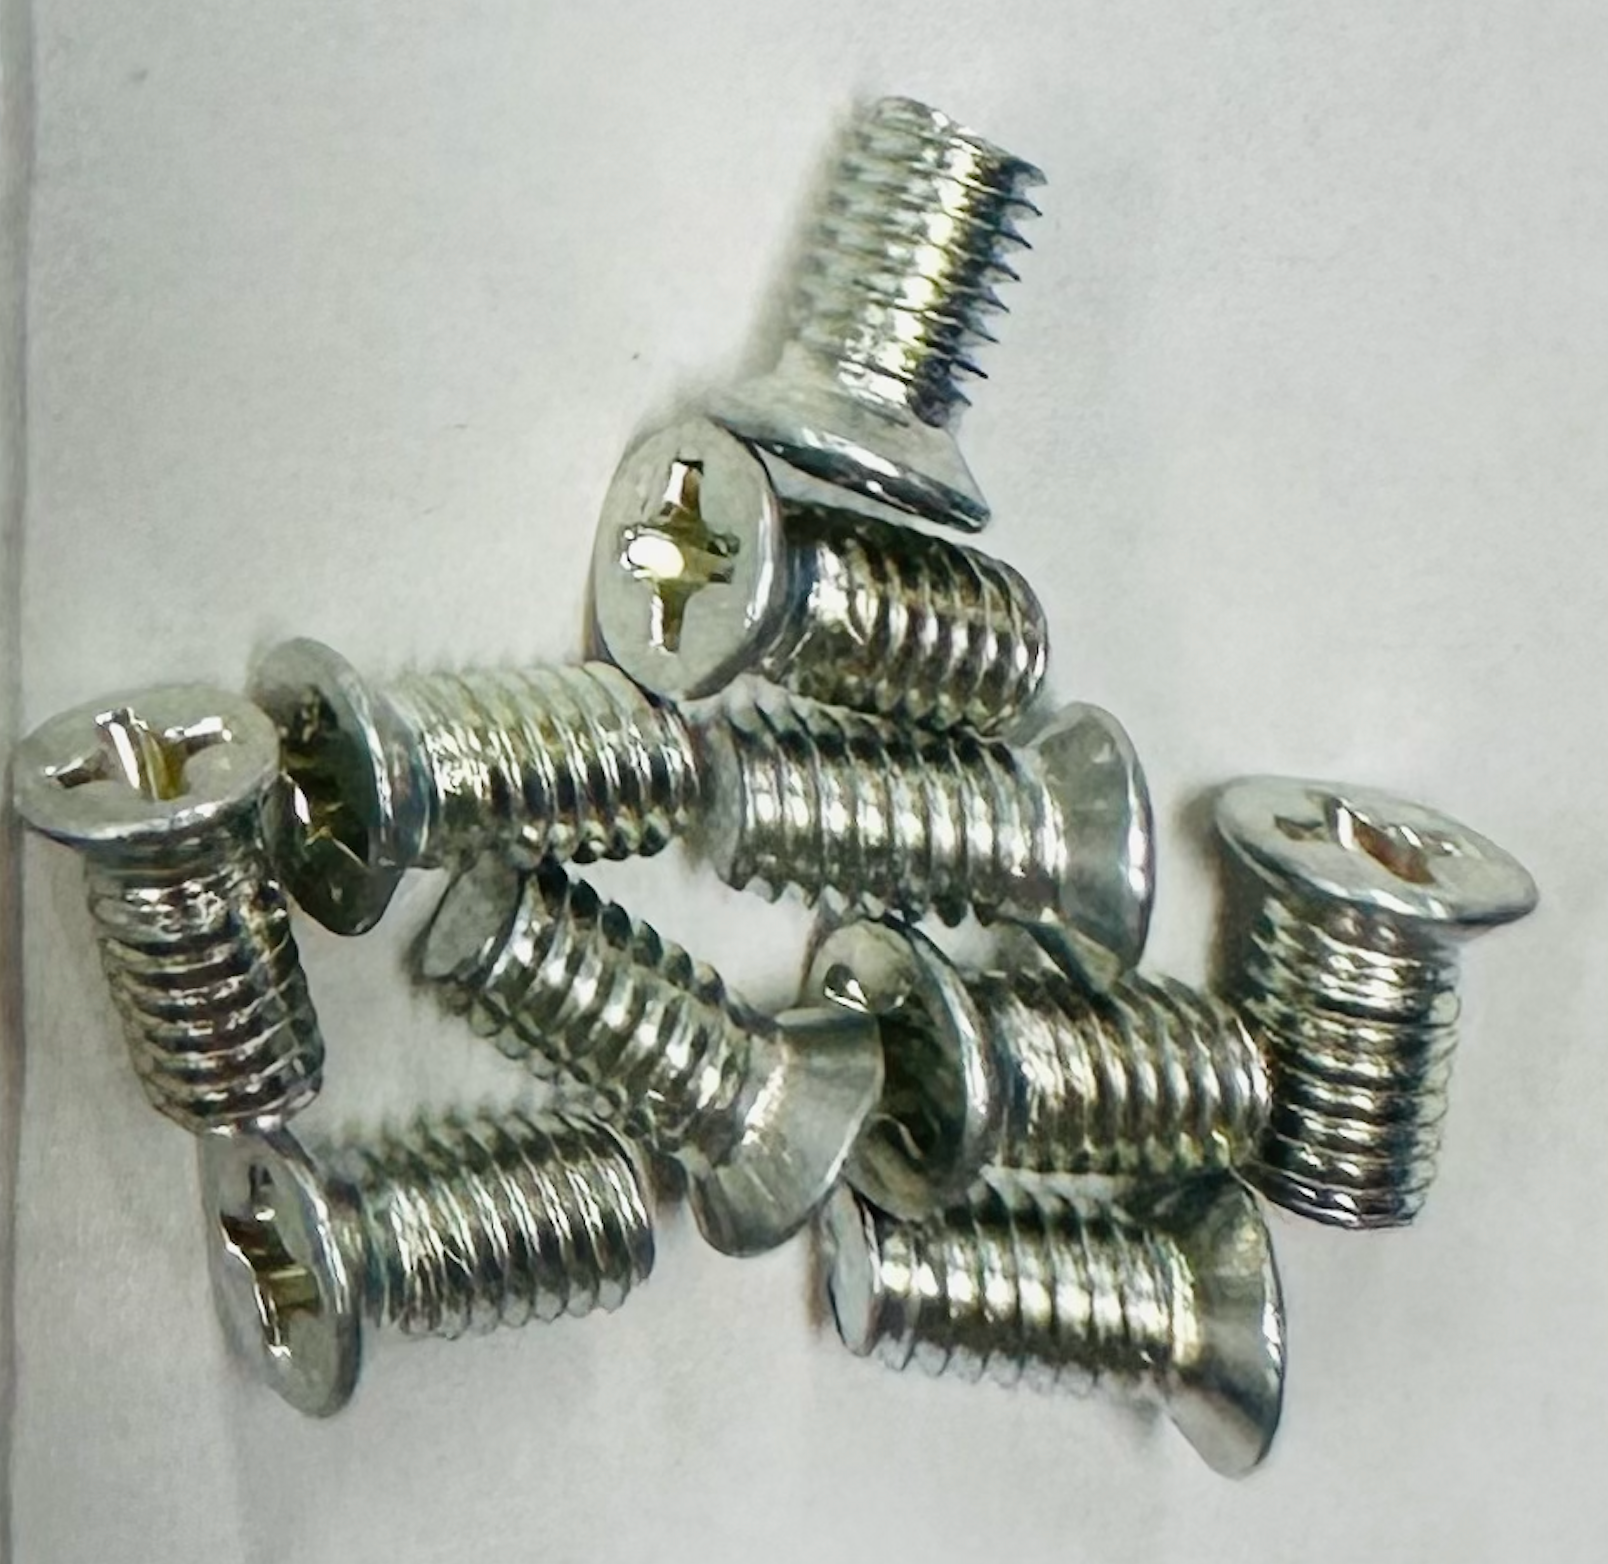 Misumi slide screws - 8mm